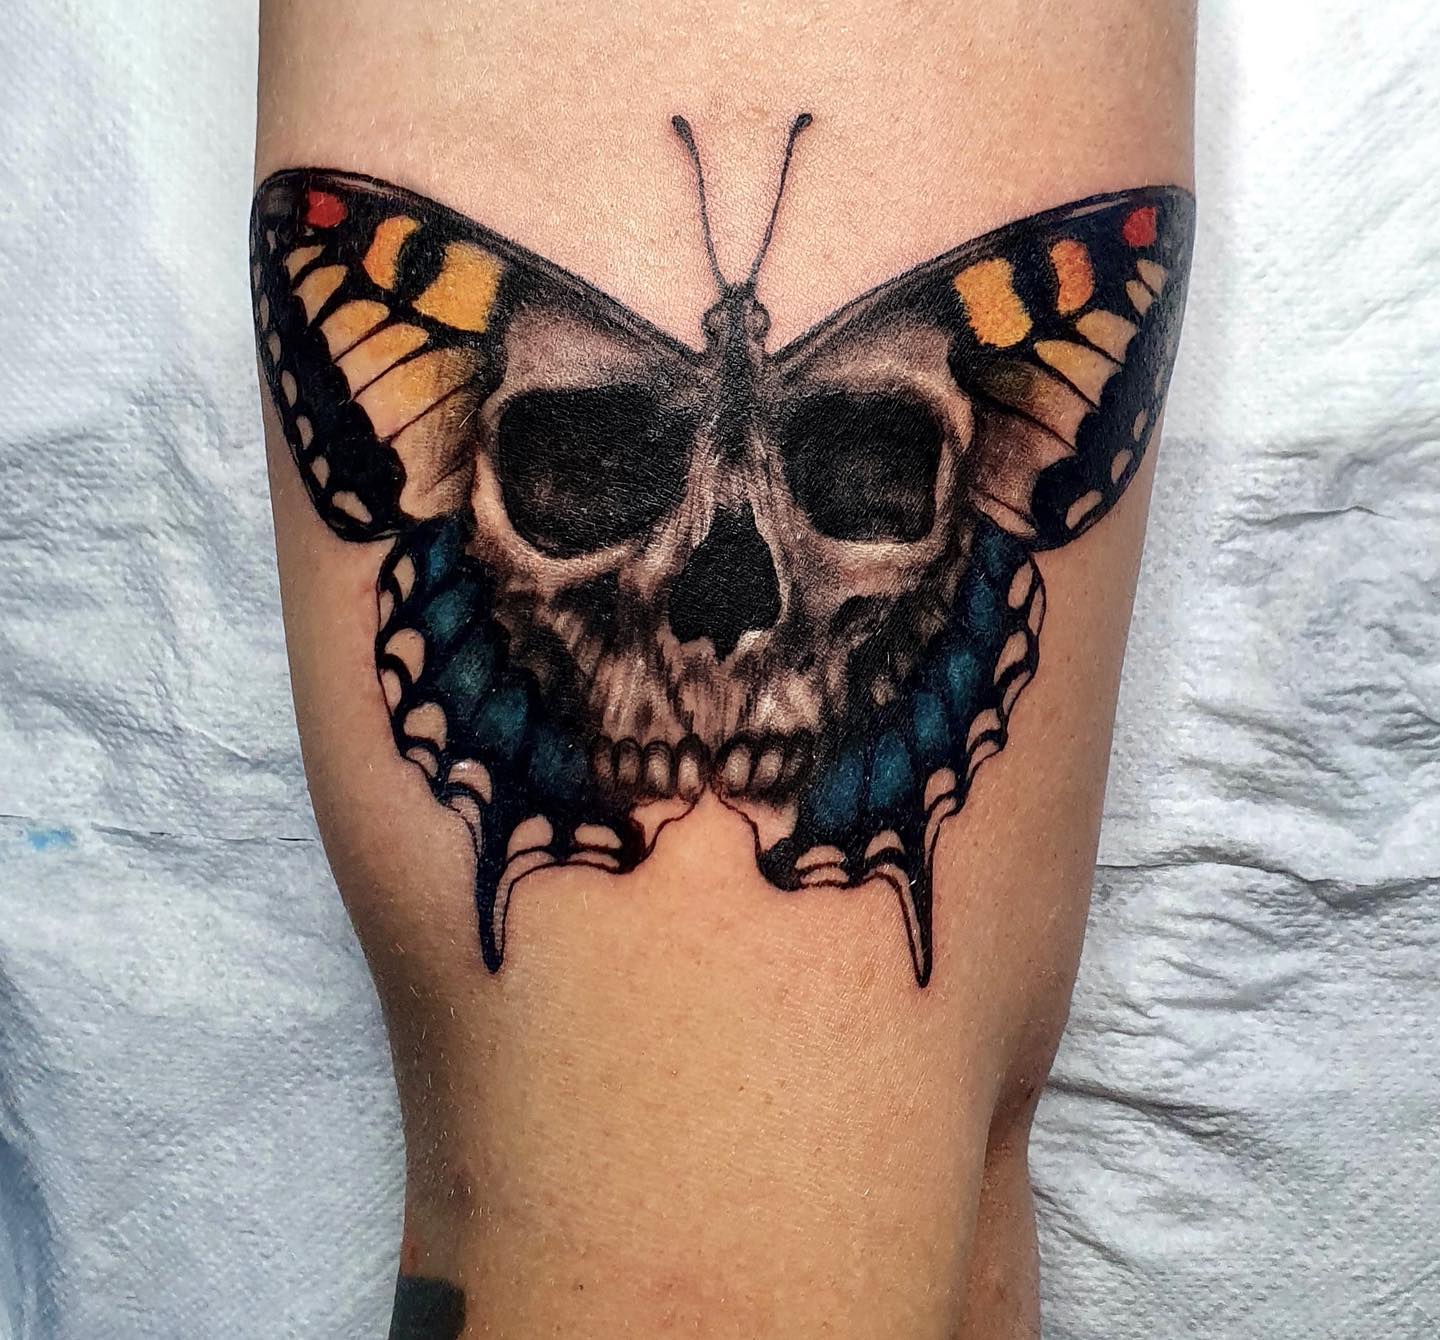 Tattoo  Pinterest  The Butterfly Butterflies and Skulls  Cool tattoos Skull  tattoo design Tattoos